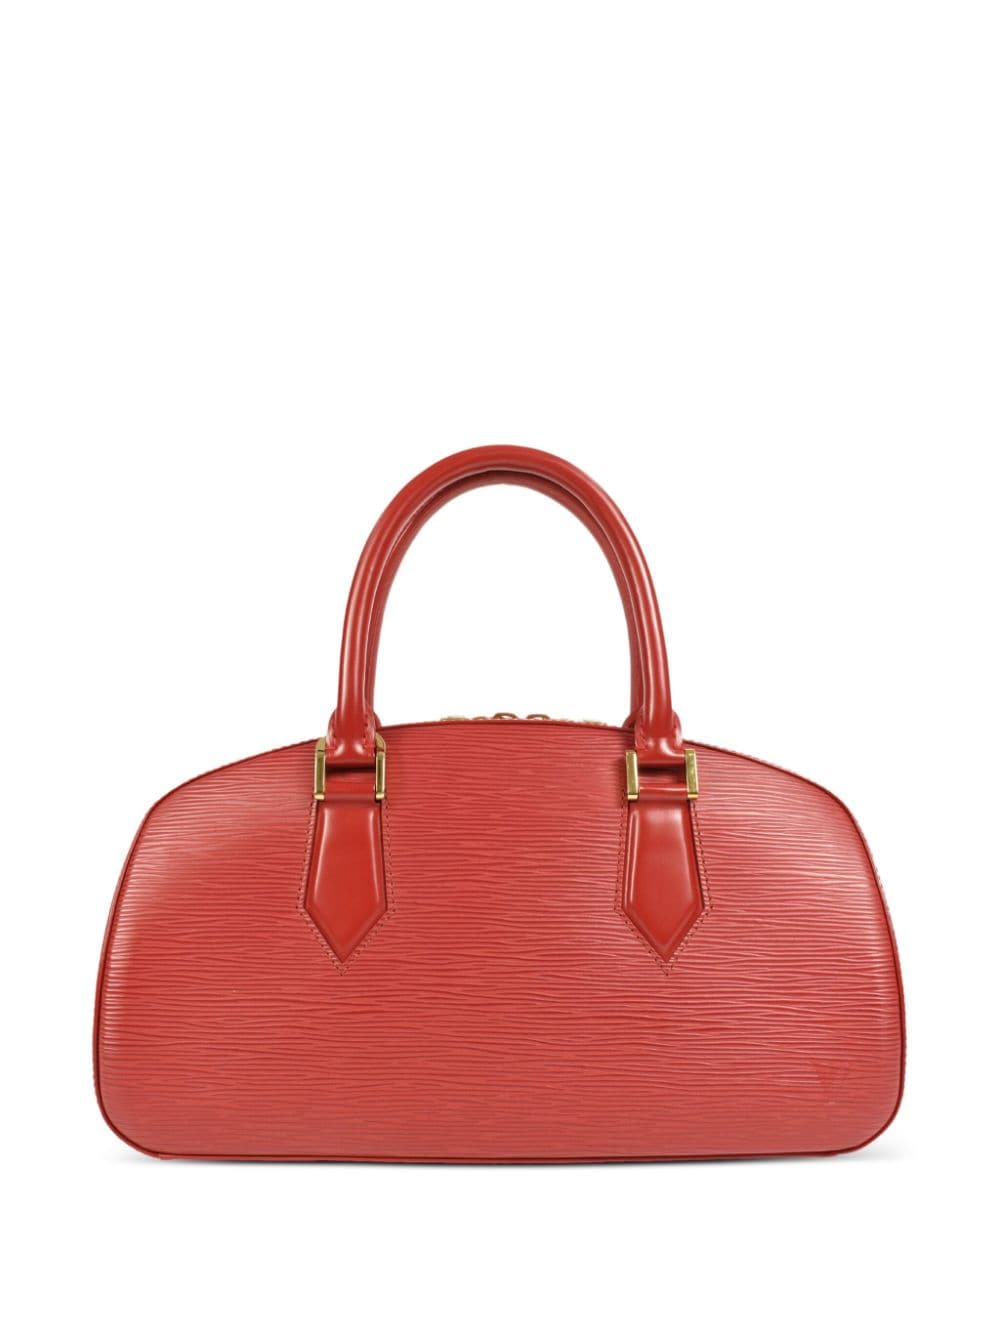 Louis Vuitton 2005 pre-owned Épi Jasmine handbag